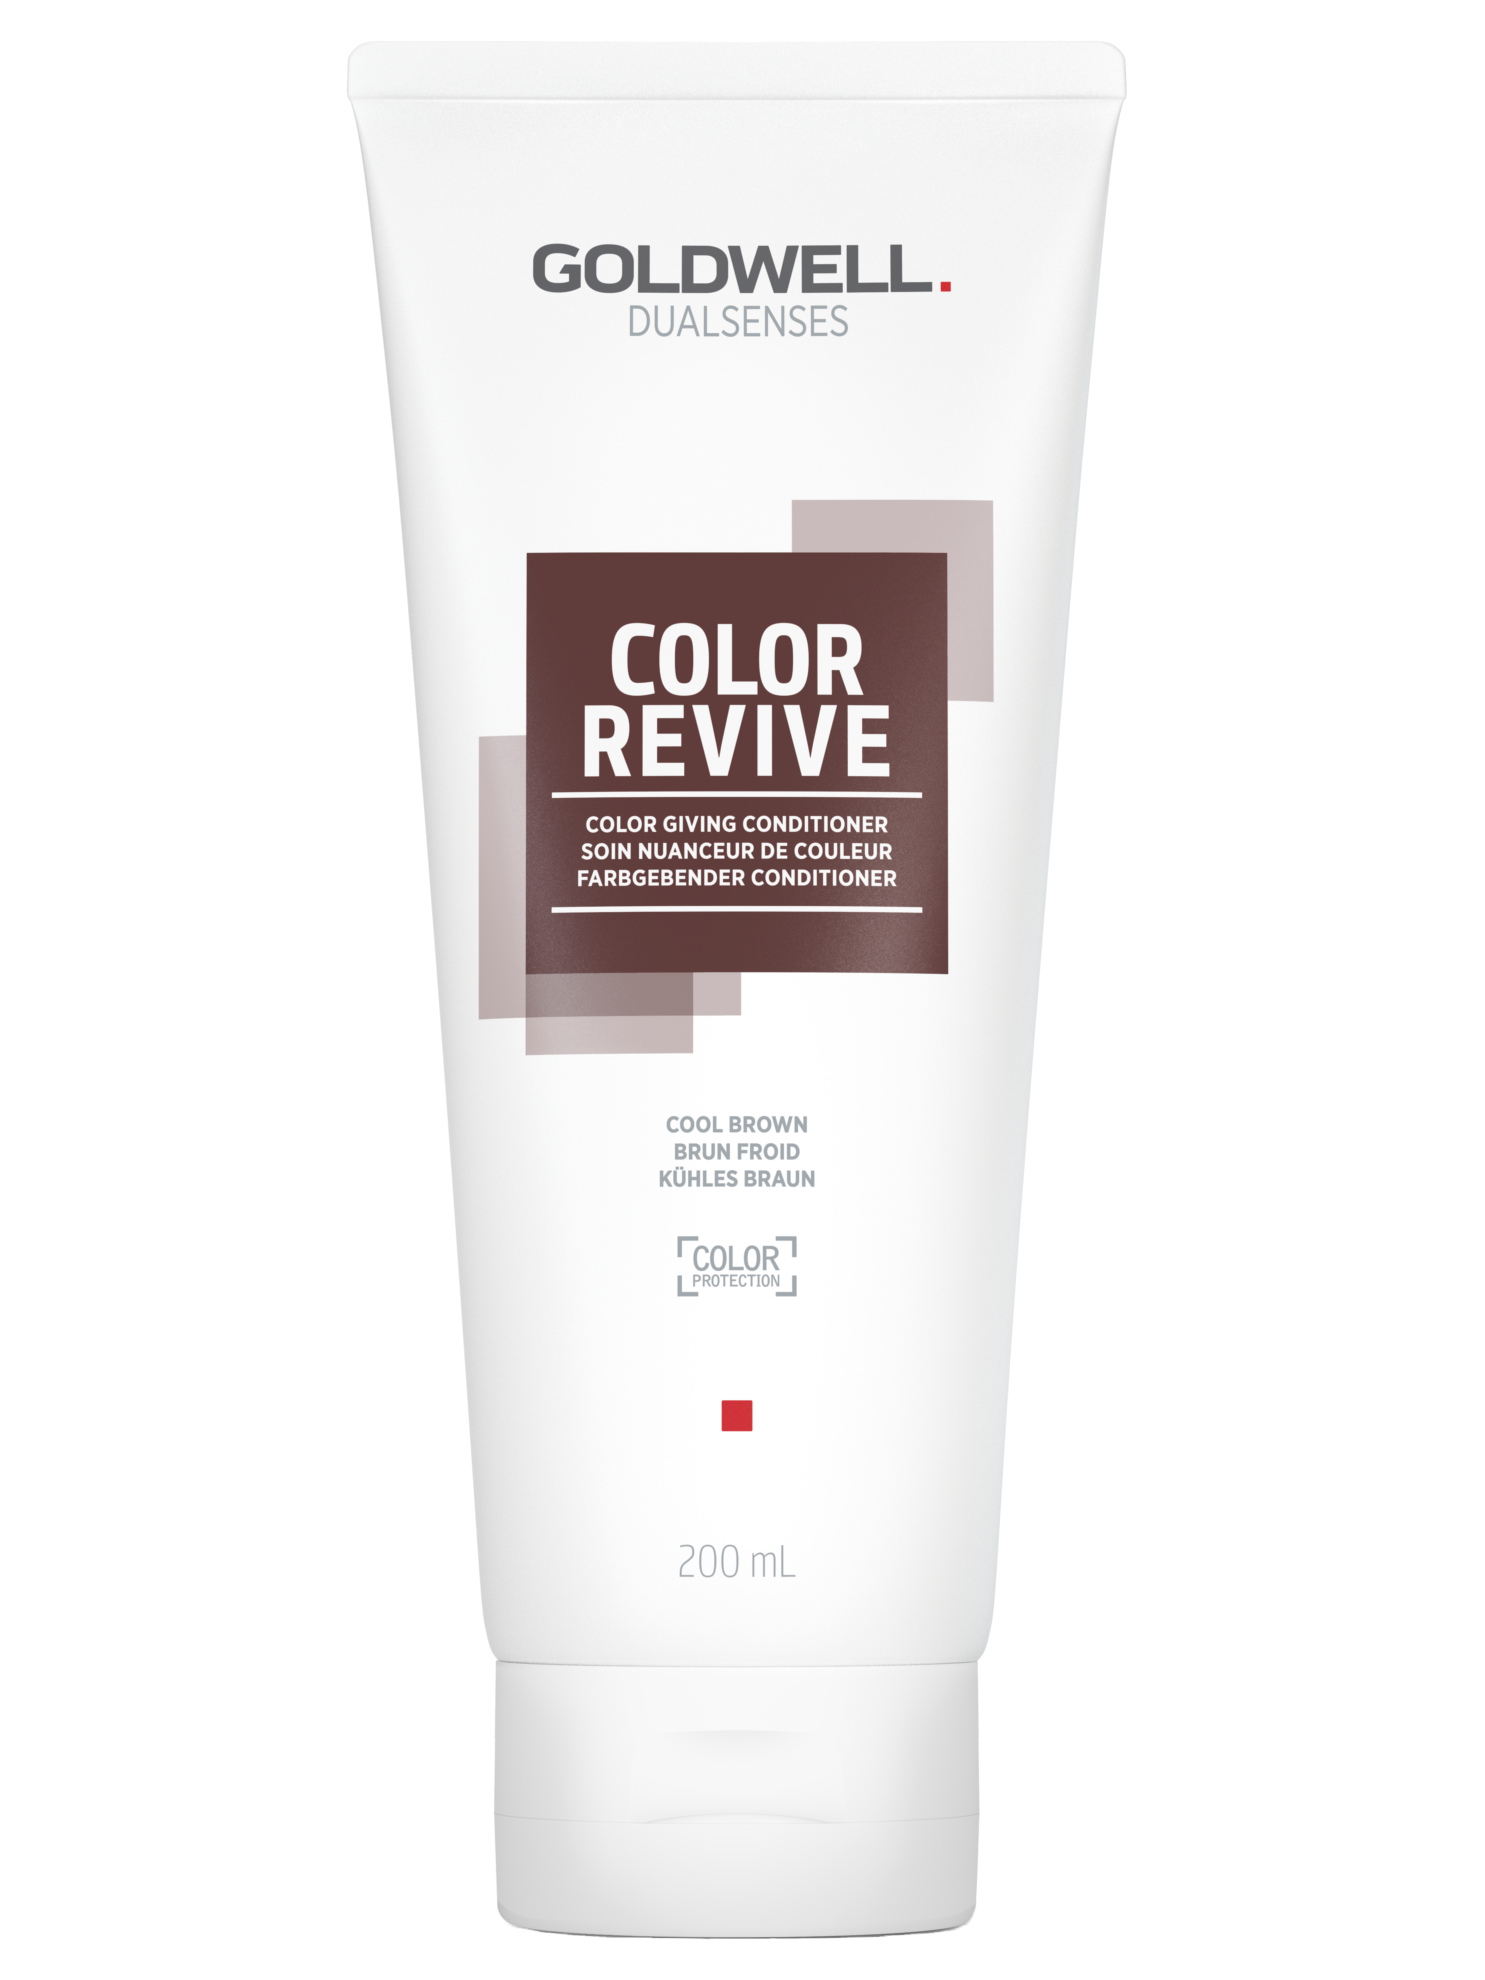 Kondicionér pro oživení barvy vlasů Goldwell Color Revive - 200 ml, studená hnědá (205628) + DÁREK ZDARMA